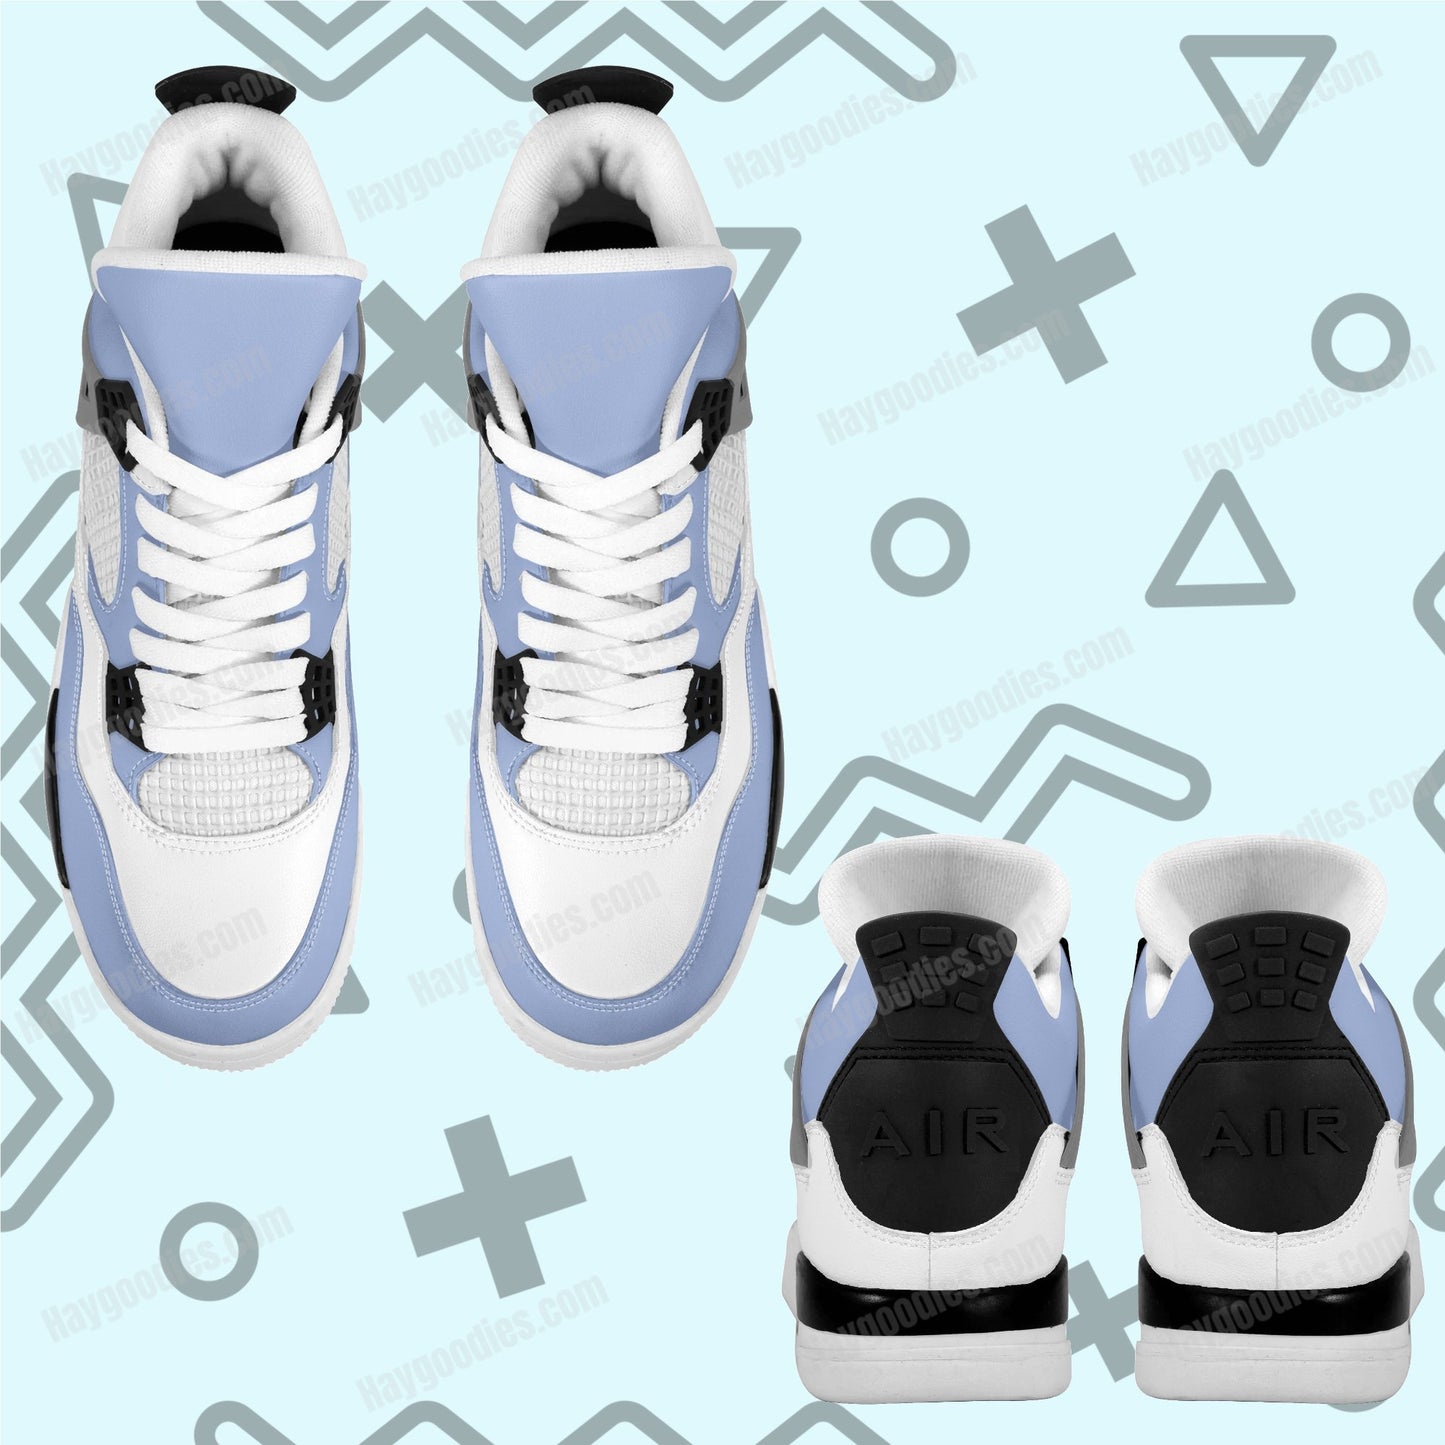 Powder Blue Color Mix Retro Low Top J4 Style Sneakers